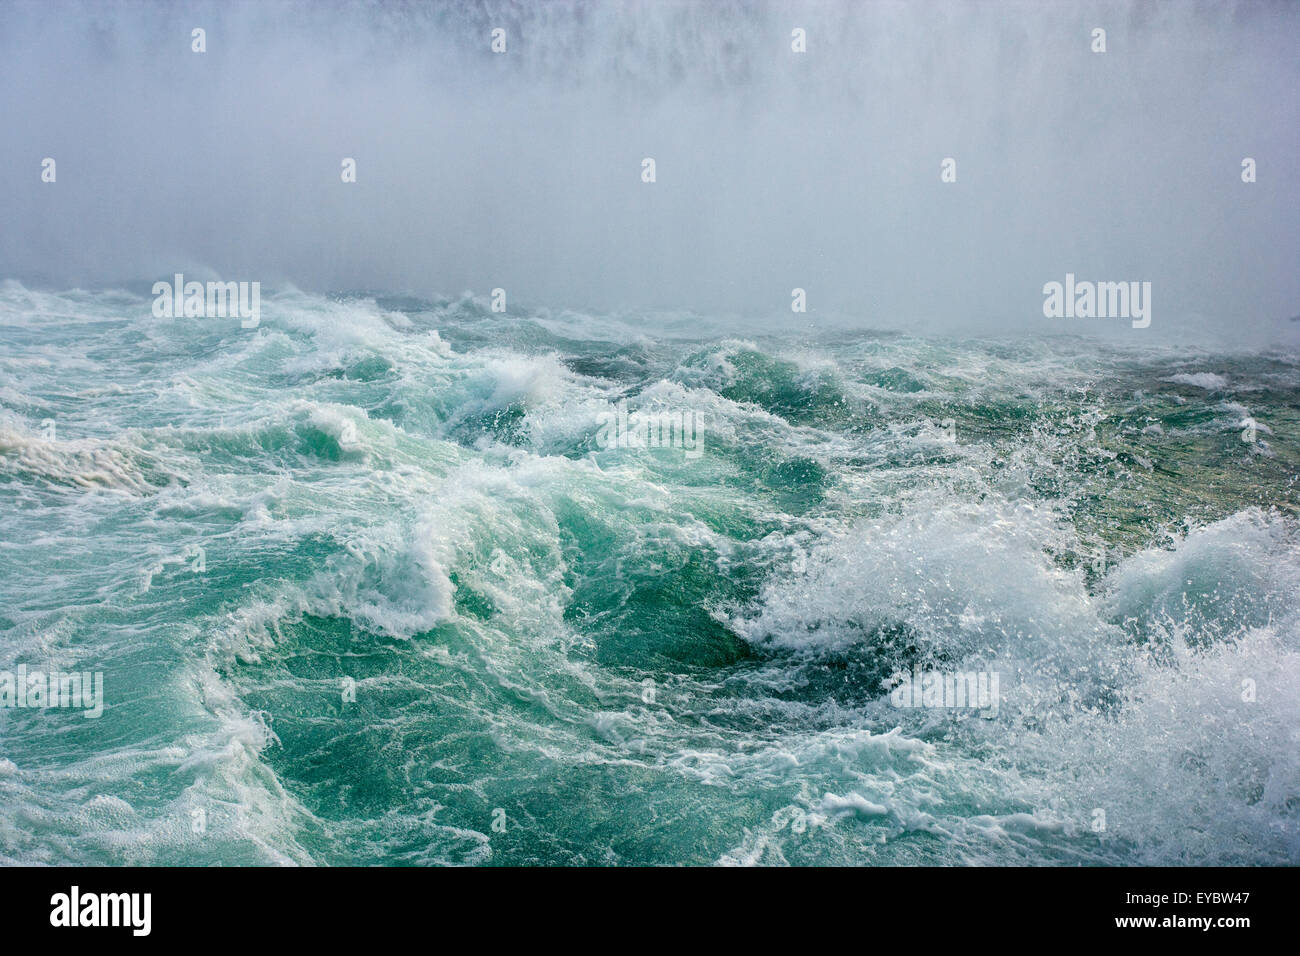 Amérique du Nord, Canada, Ontario, Niagara Falls, l'eau turbulente à la base des chutes Niagara, Niagara River Banque D'Images